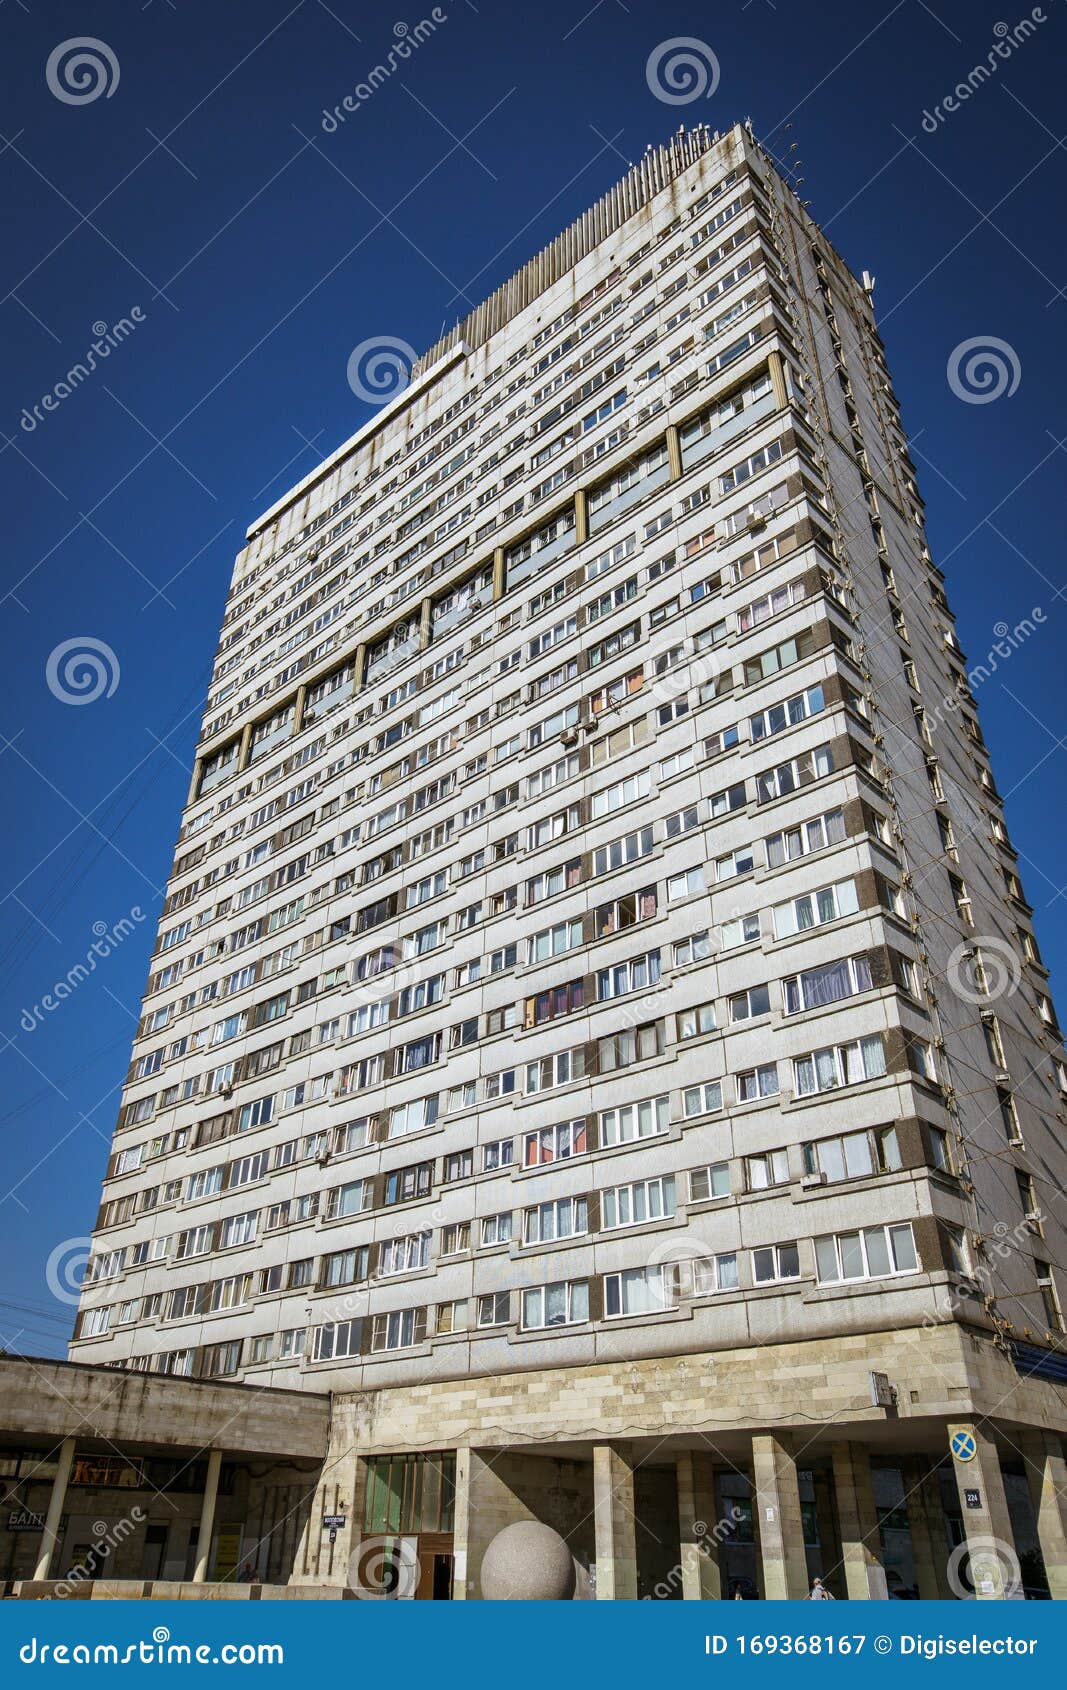 fragment of residential building in saint-petersburg, russia, soviet modernism brutalism